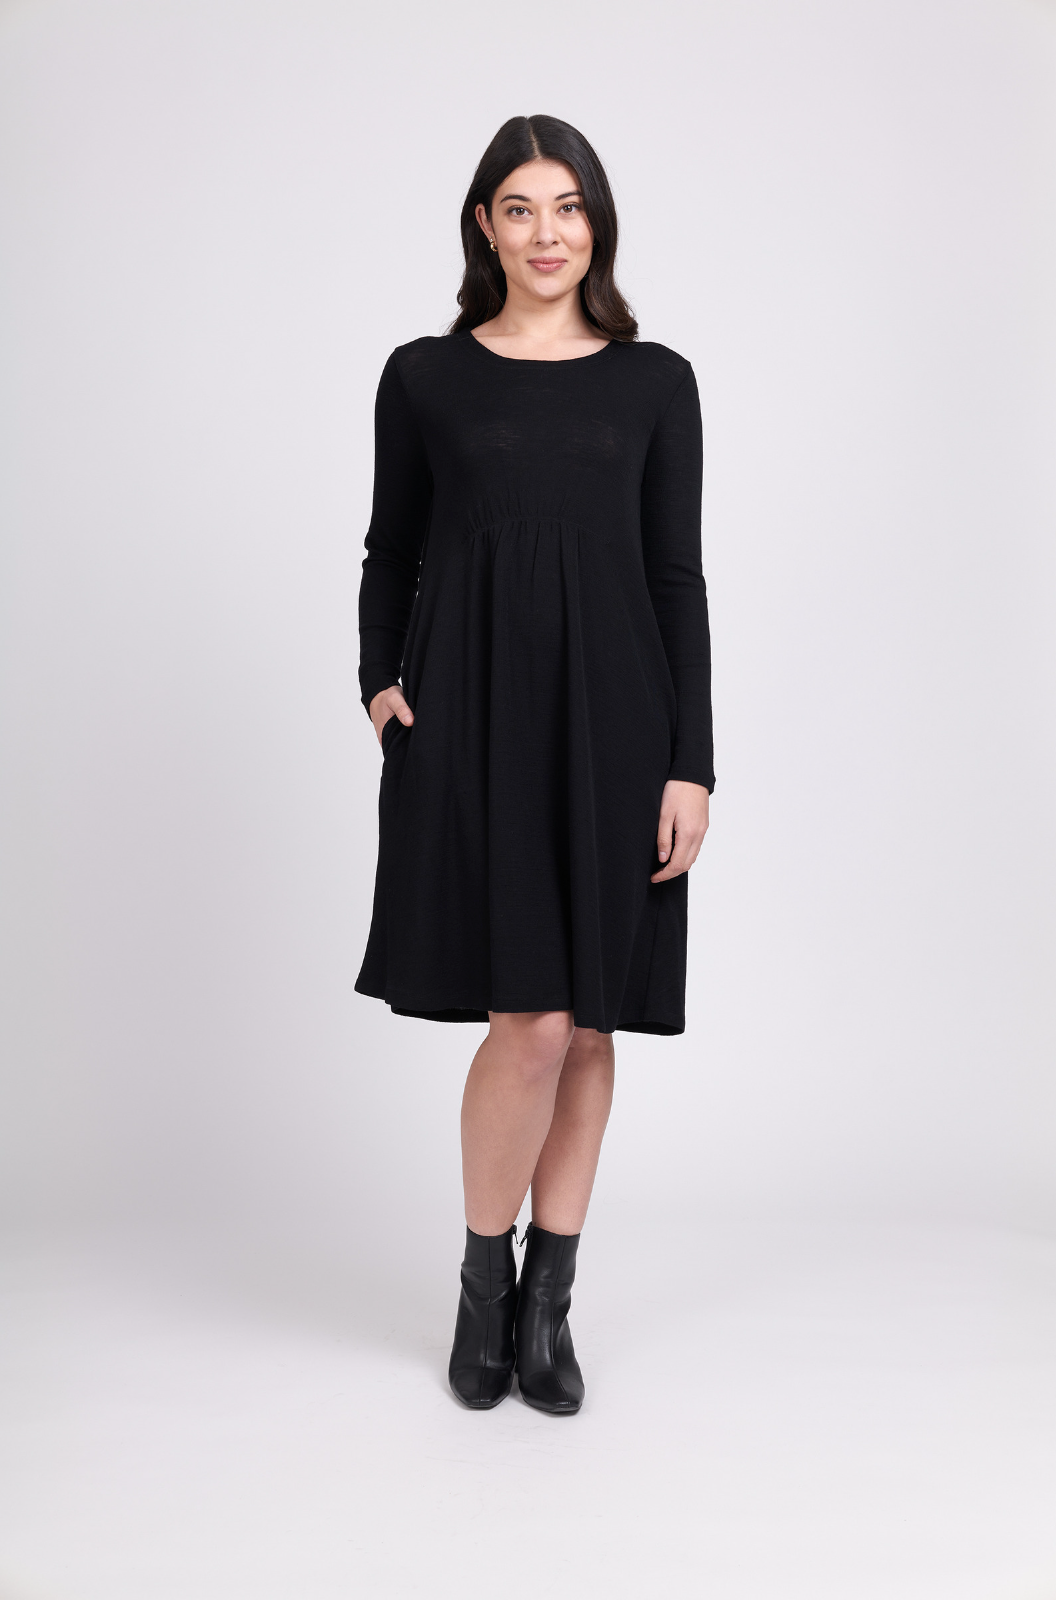 Foil Leia Dress in Black Merino Wool